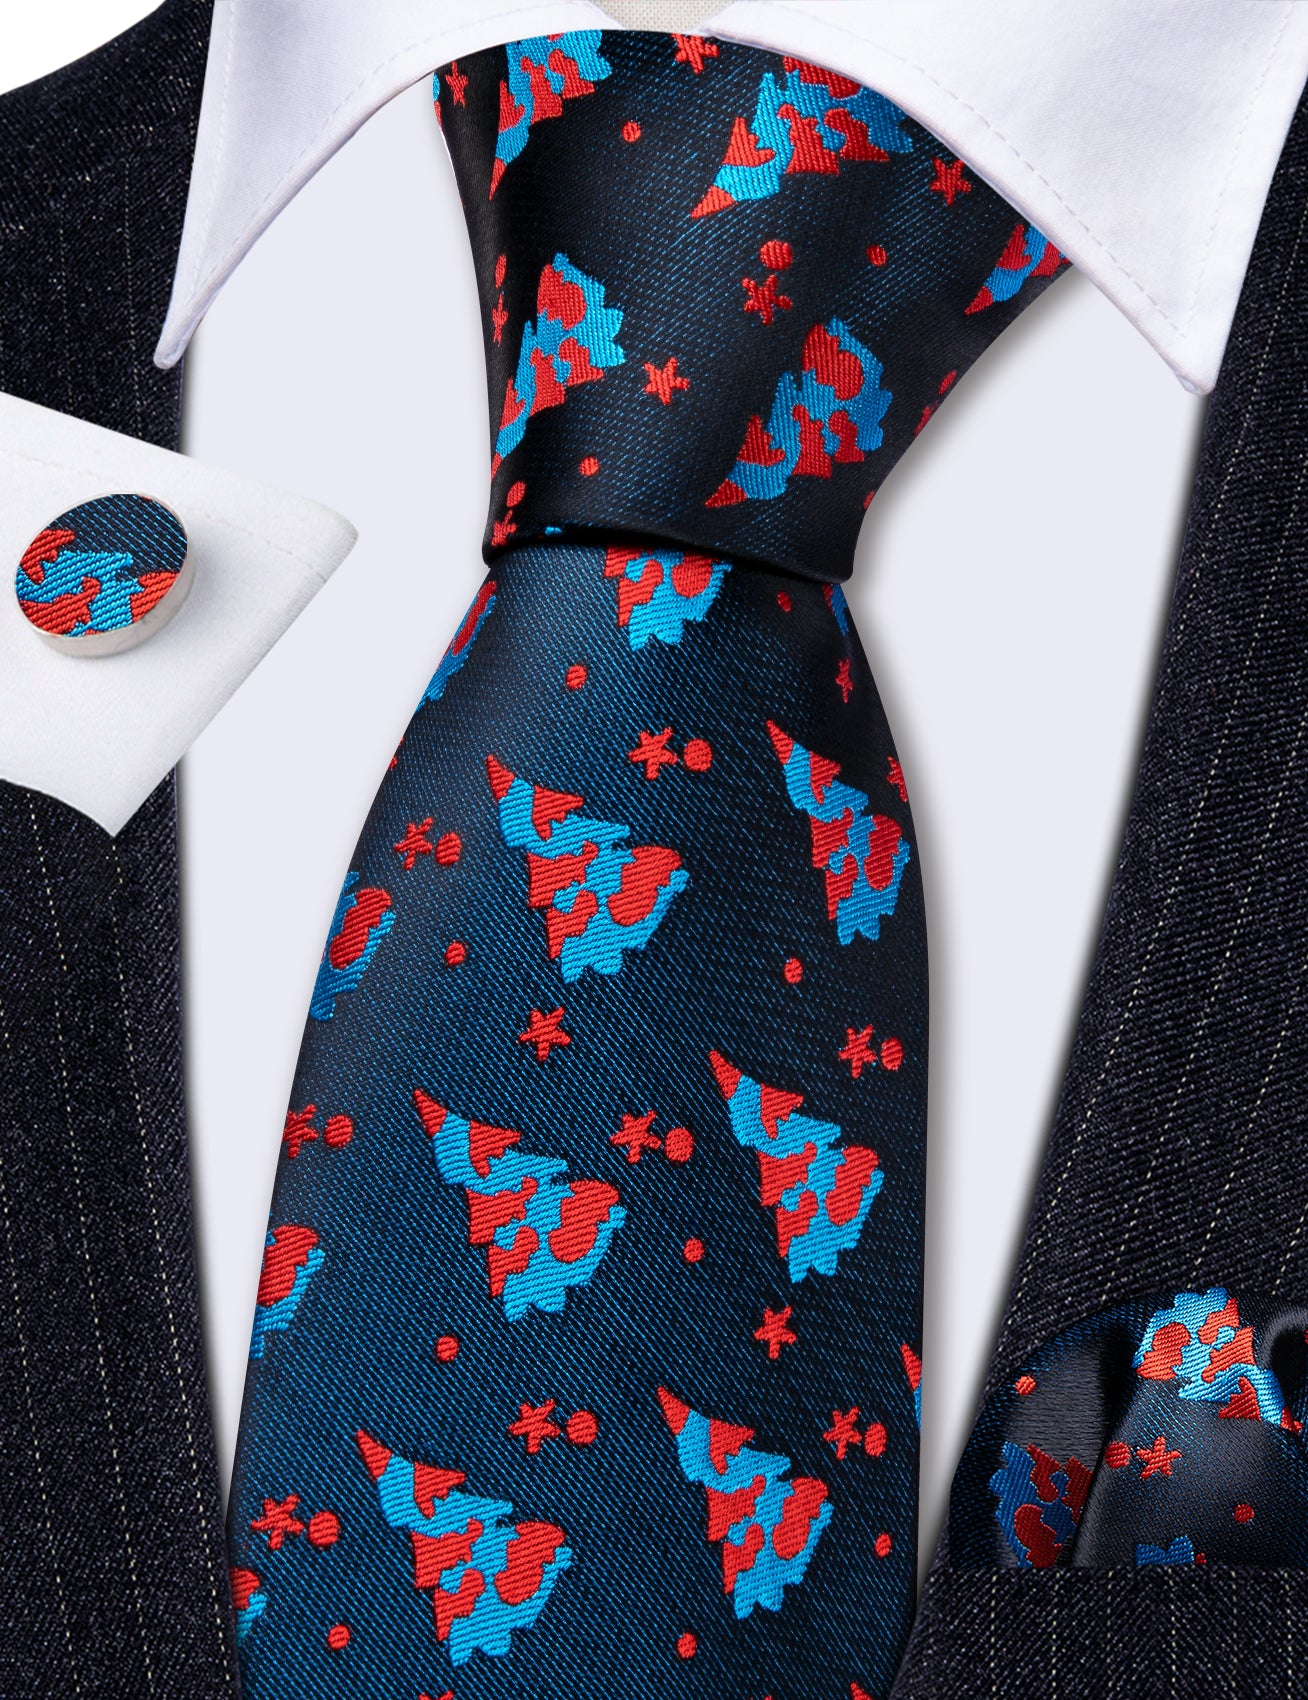 Barry.wang Christmas Tie Men's Black Blue Neckties Jacquard Tie Hanky Cufflinks